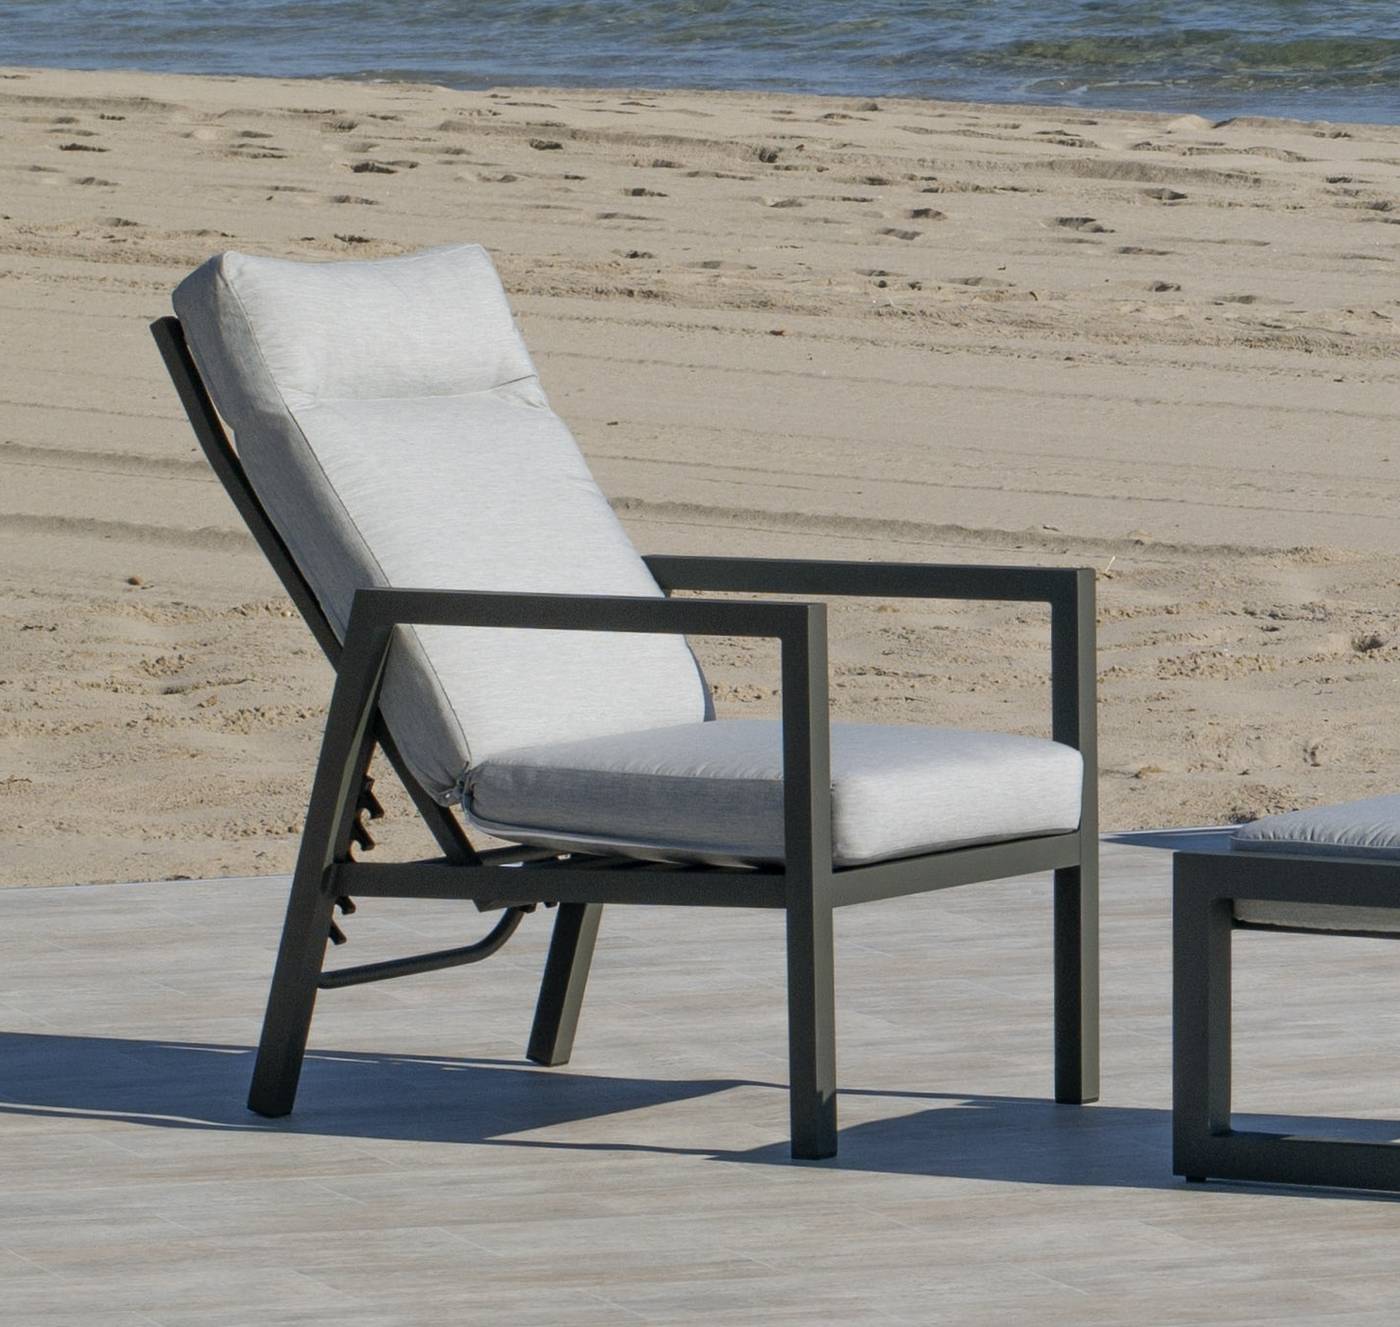 Set Aluminio Voriam-7 - Conjunto aluminio: sofá 2 plazas + 2 sillones + mesa de centro. Respaldos reclinables. Colores: blanco, antracita, champagne, plata o marrón.